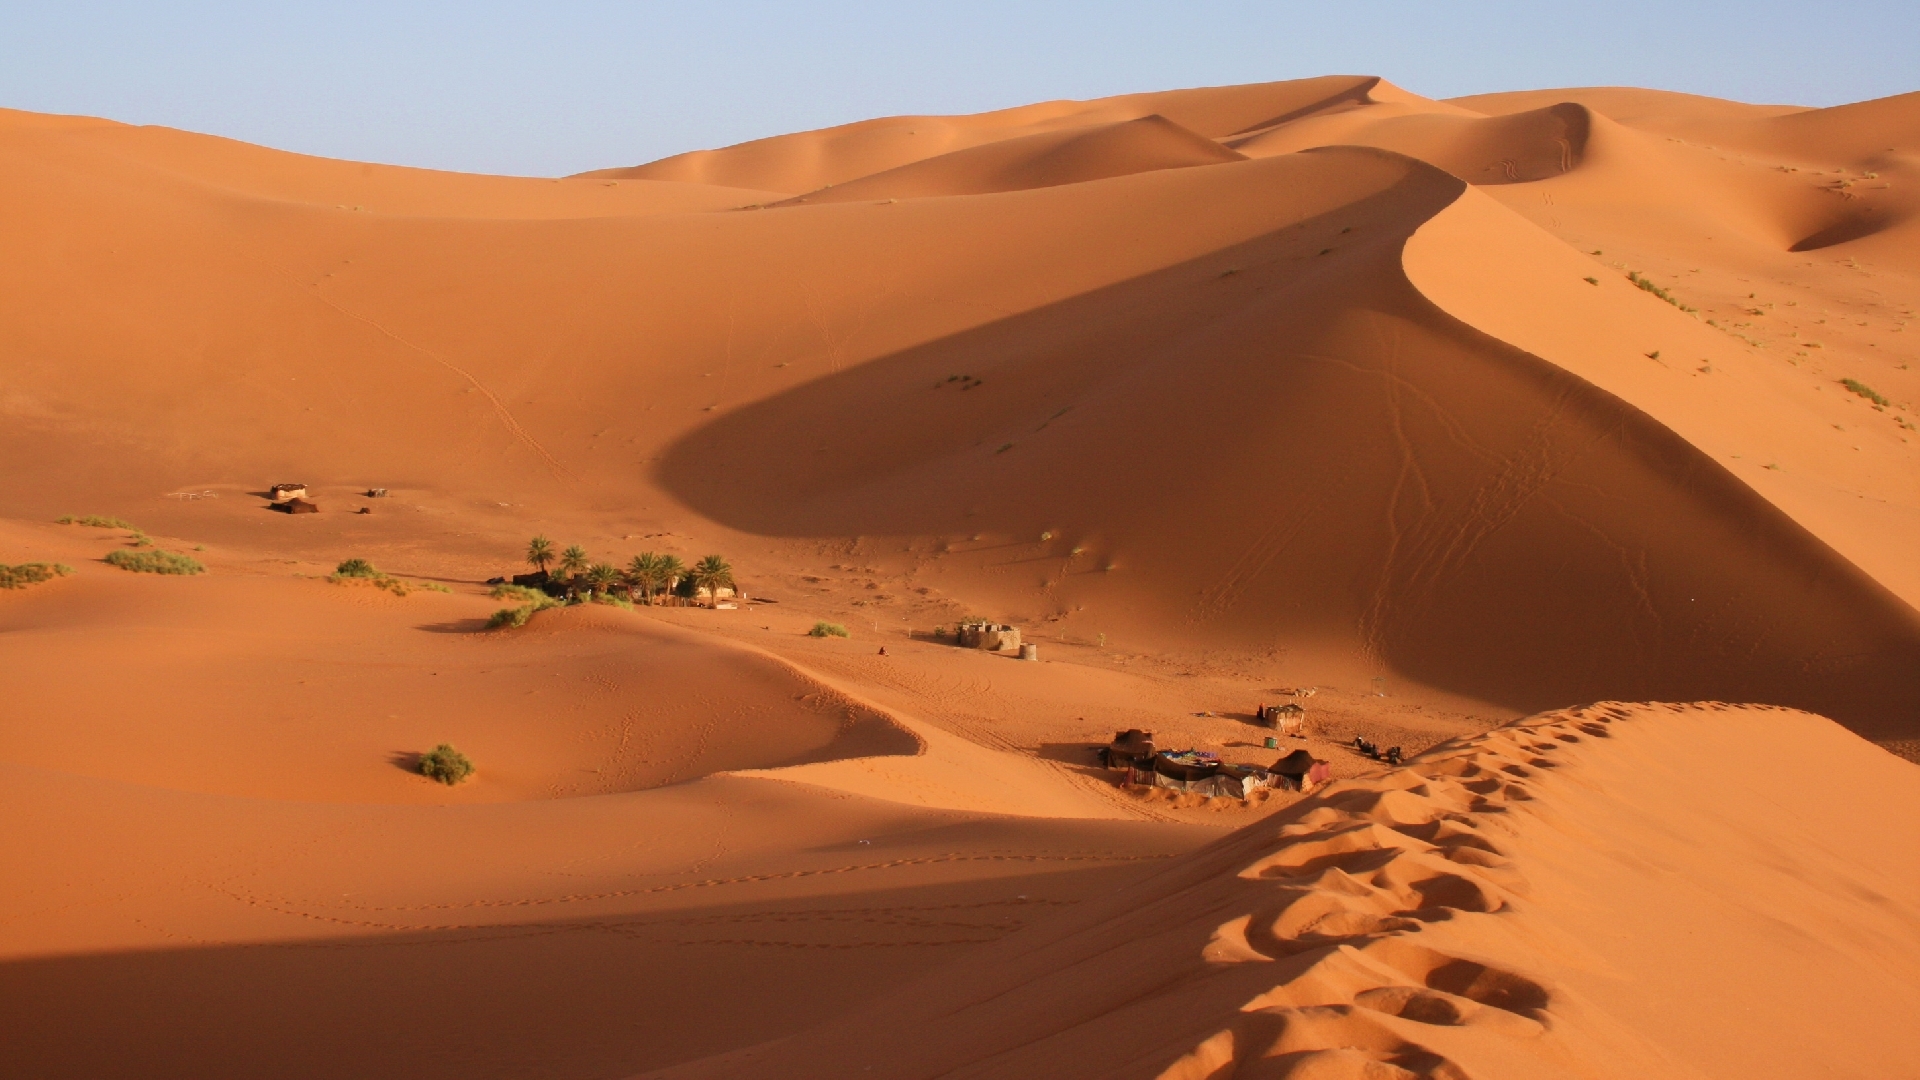 Арабский оазис. Пустыня Каракум Оазис. Эль ХАМРА пустыня. Пейзаж пустыни Кызылкум. Сахара Оазис.